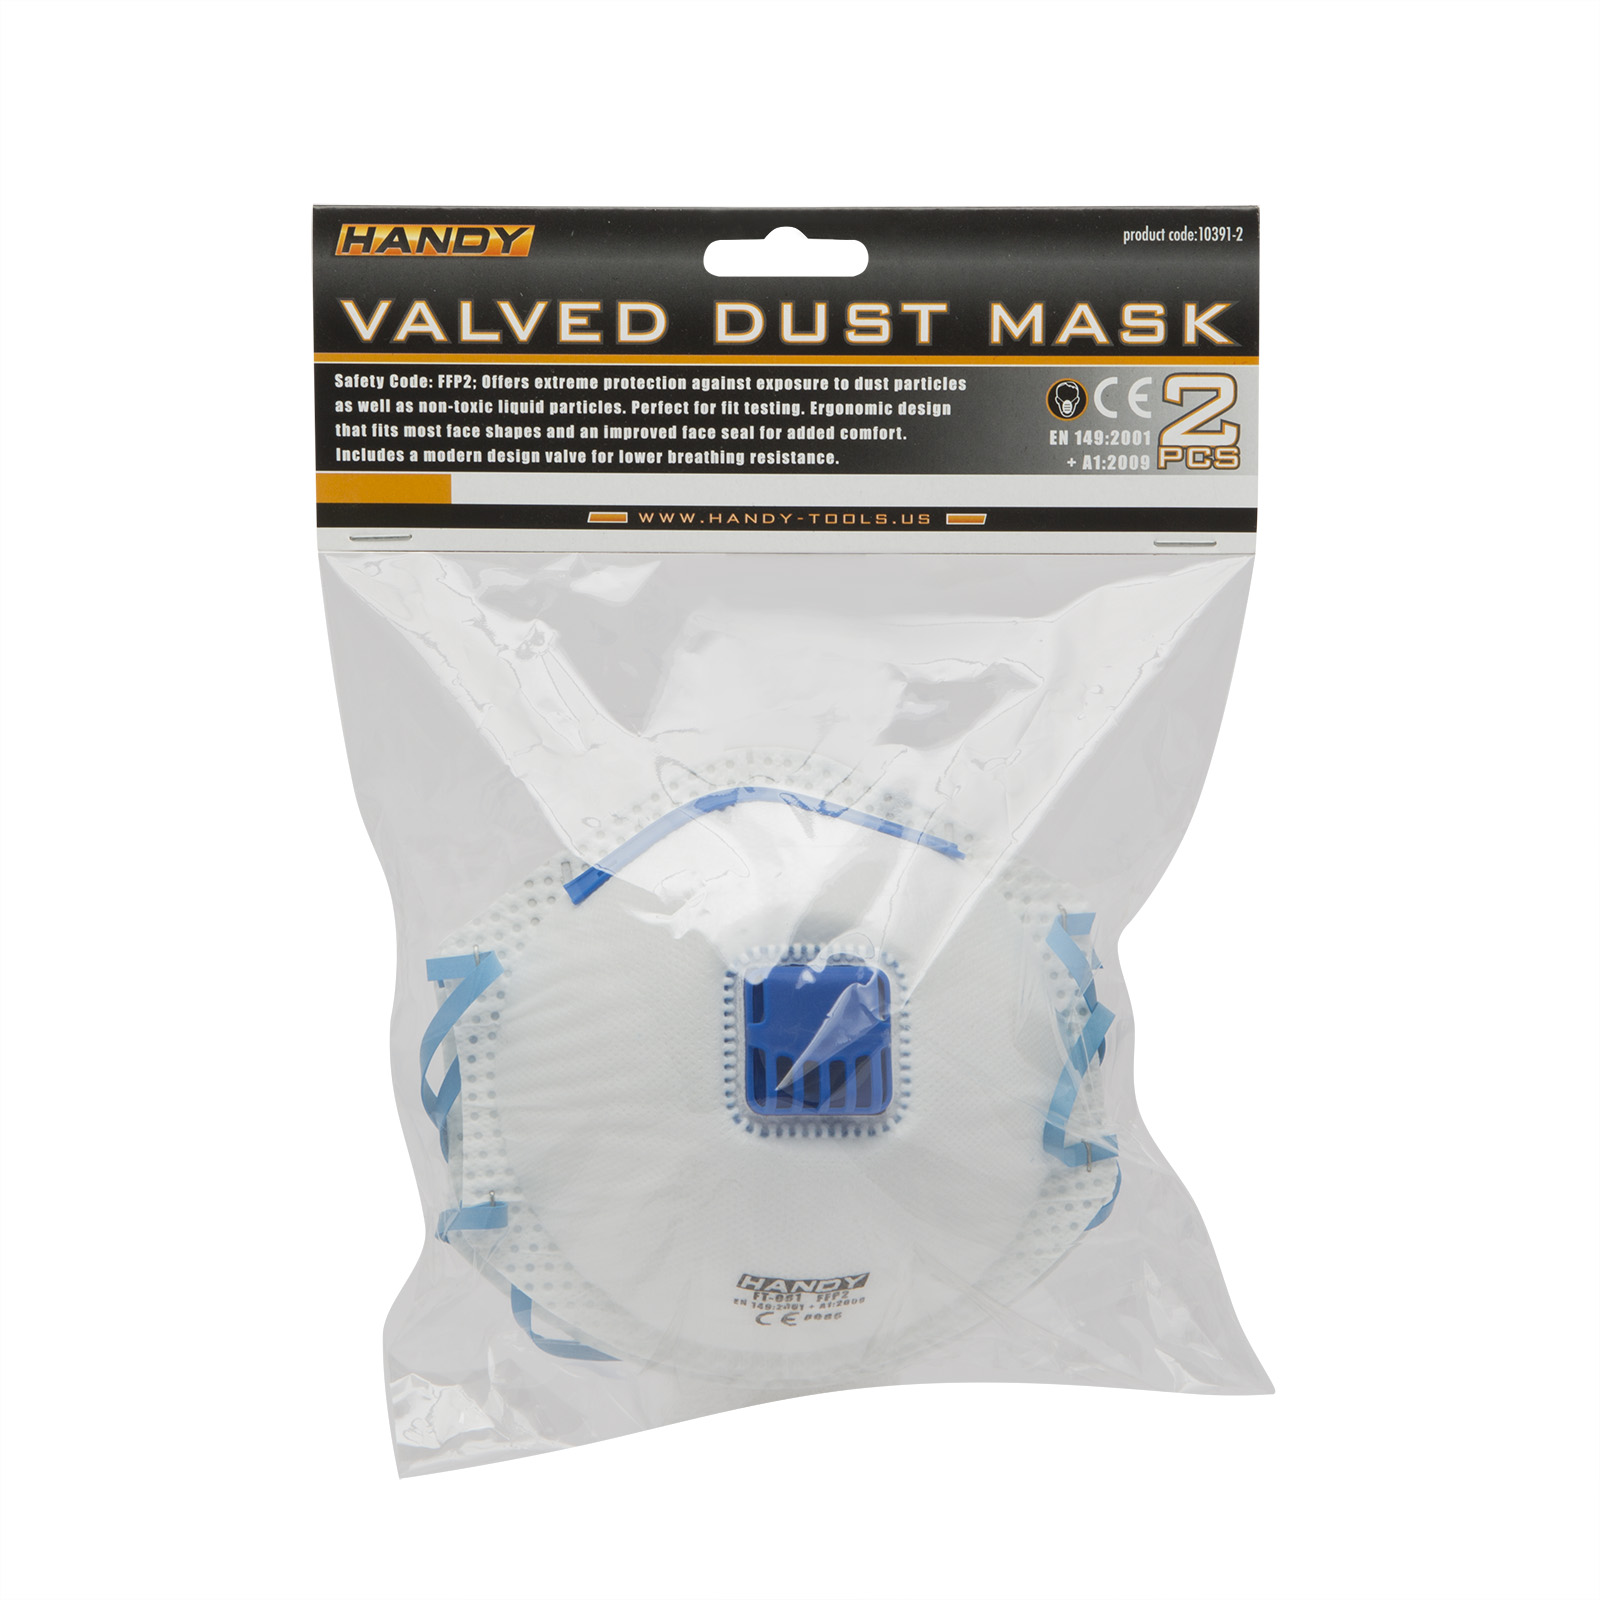 Valved Dust Mask thumb